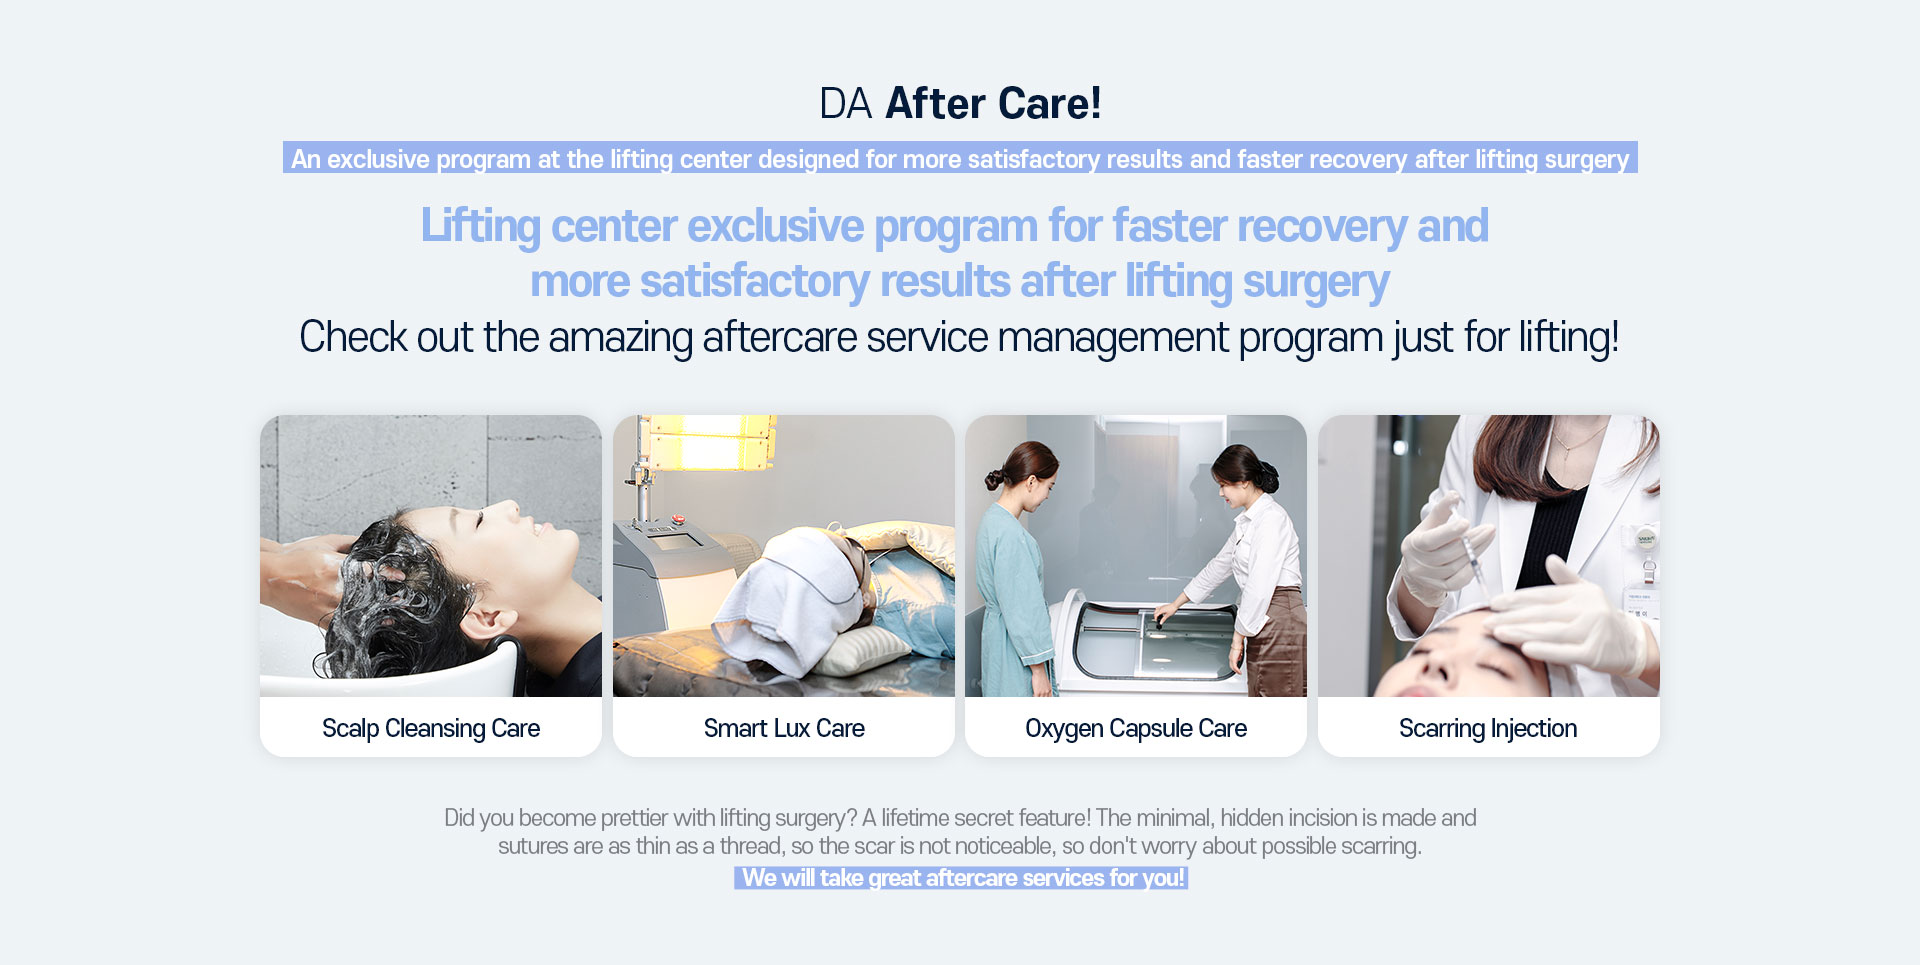 DA After Care!